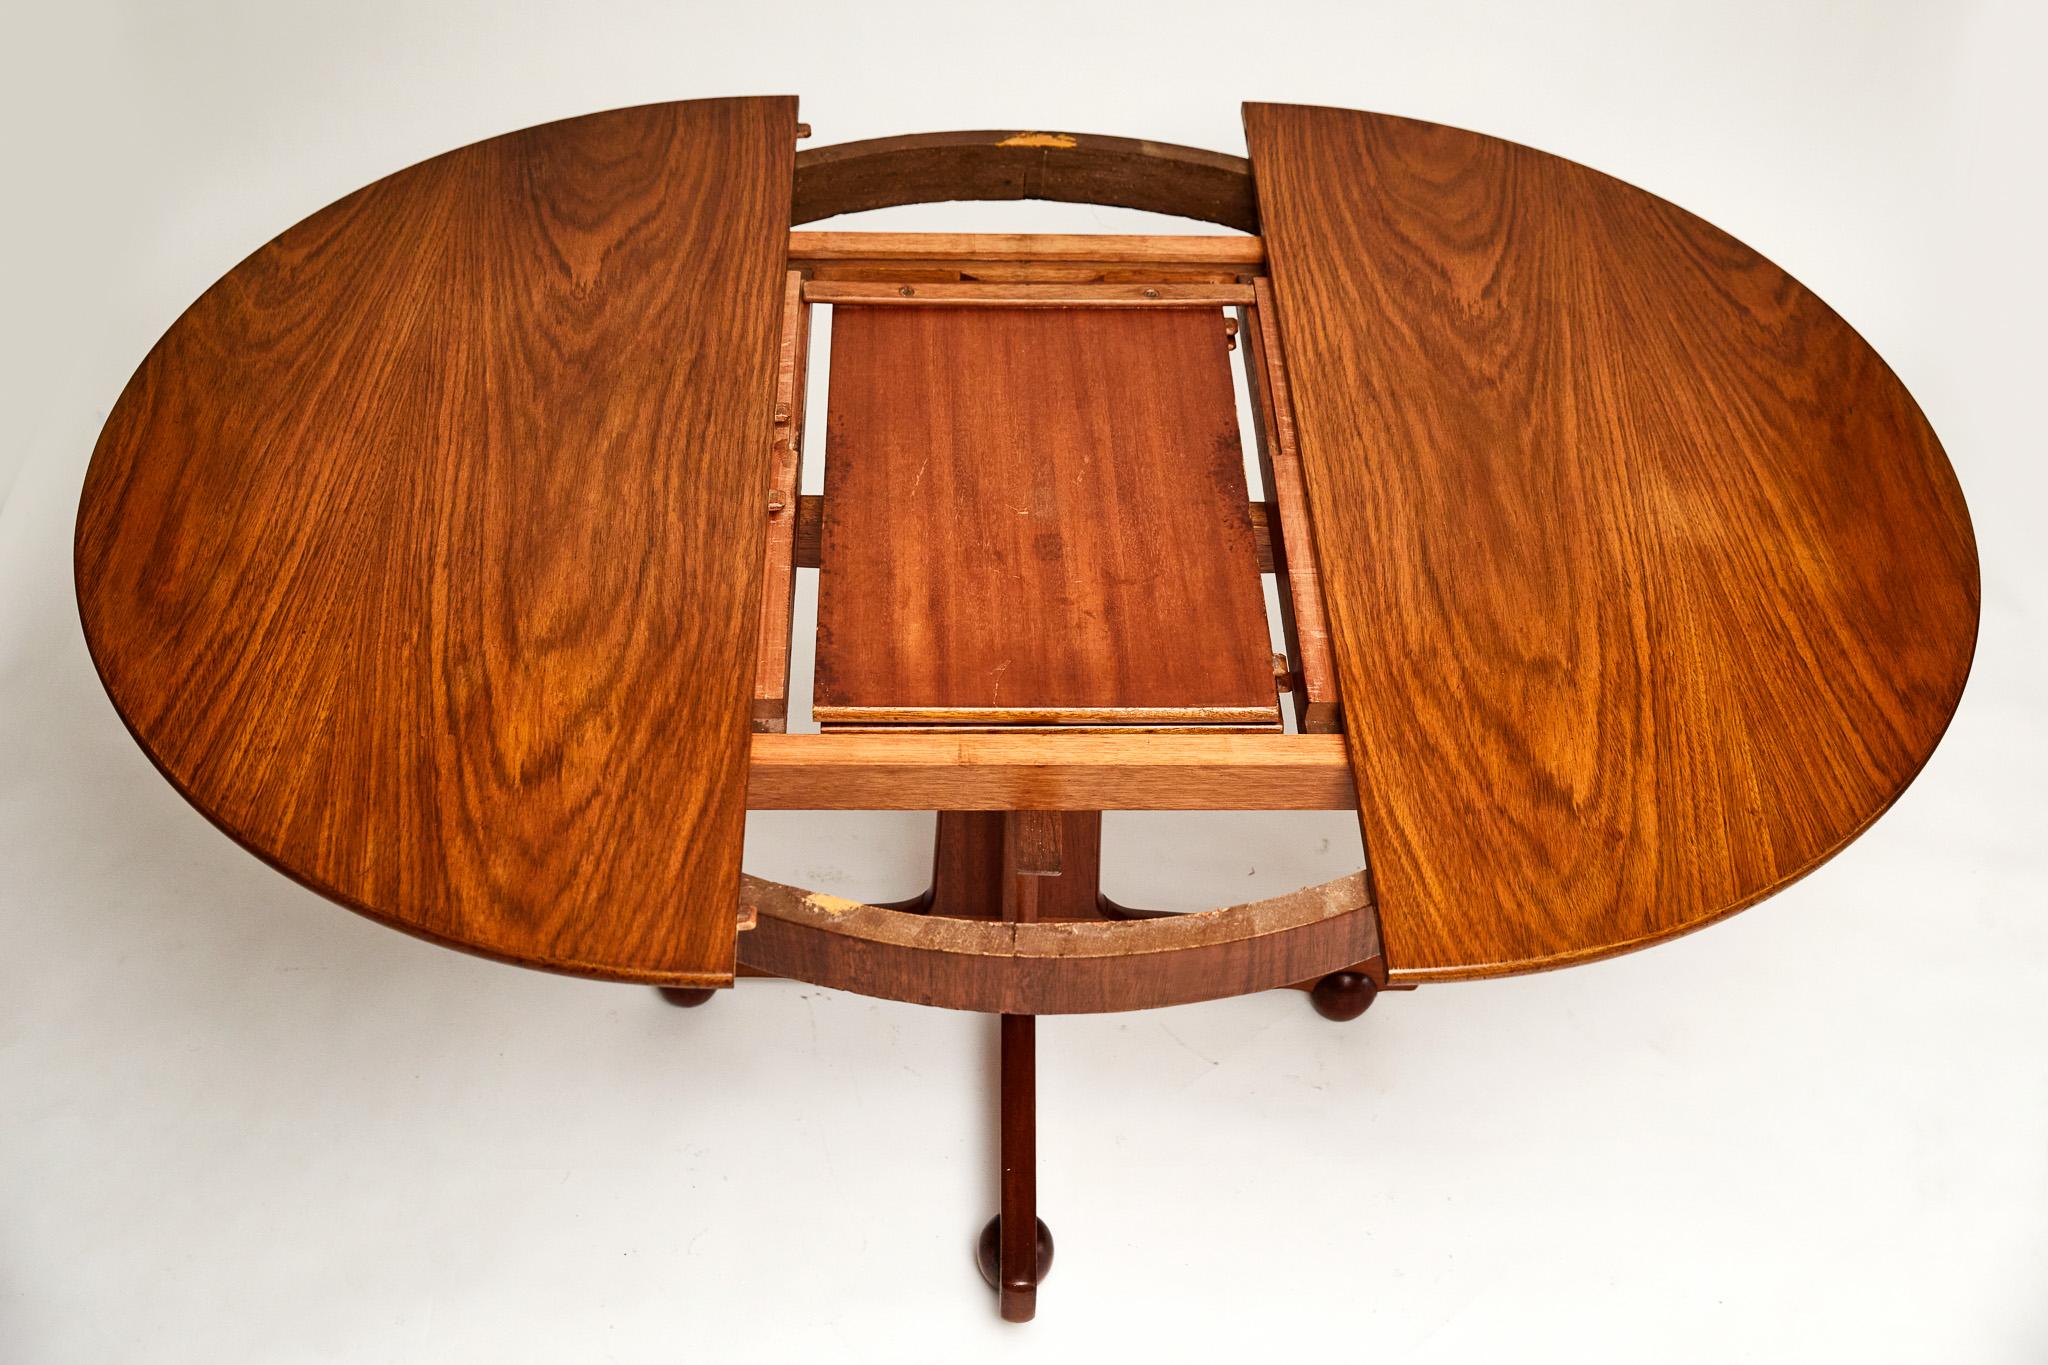 20th Century Brazilian Modern Table in Hardwood by Geraldo de Barros for Hobjeto Brazil 1972 For Sale